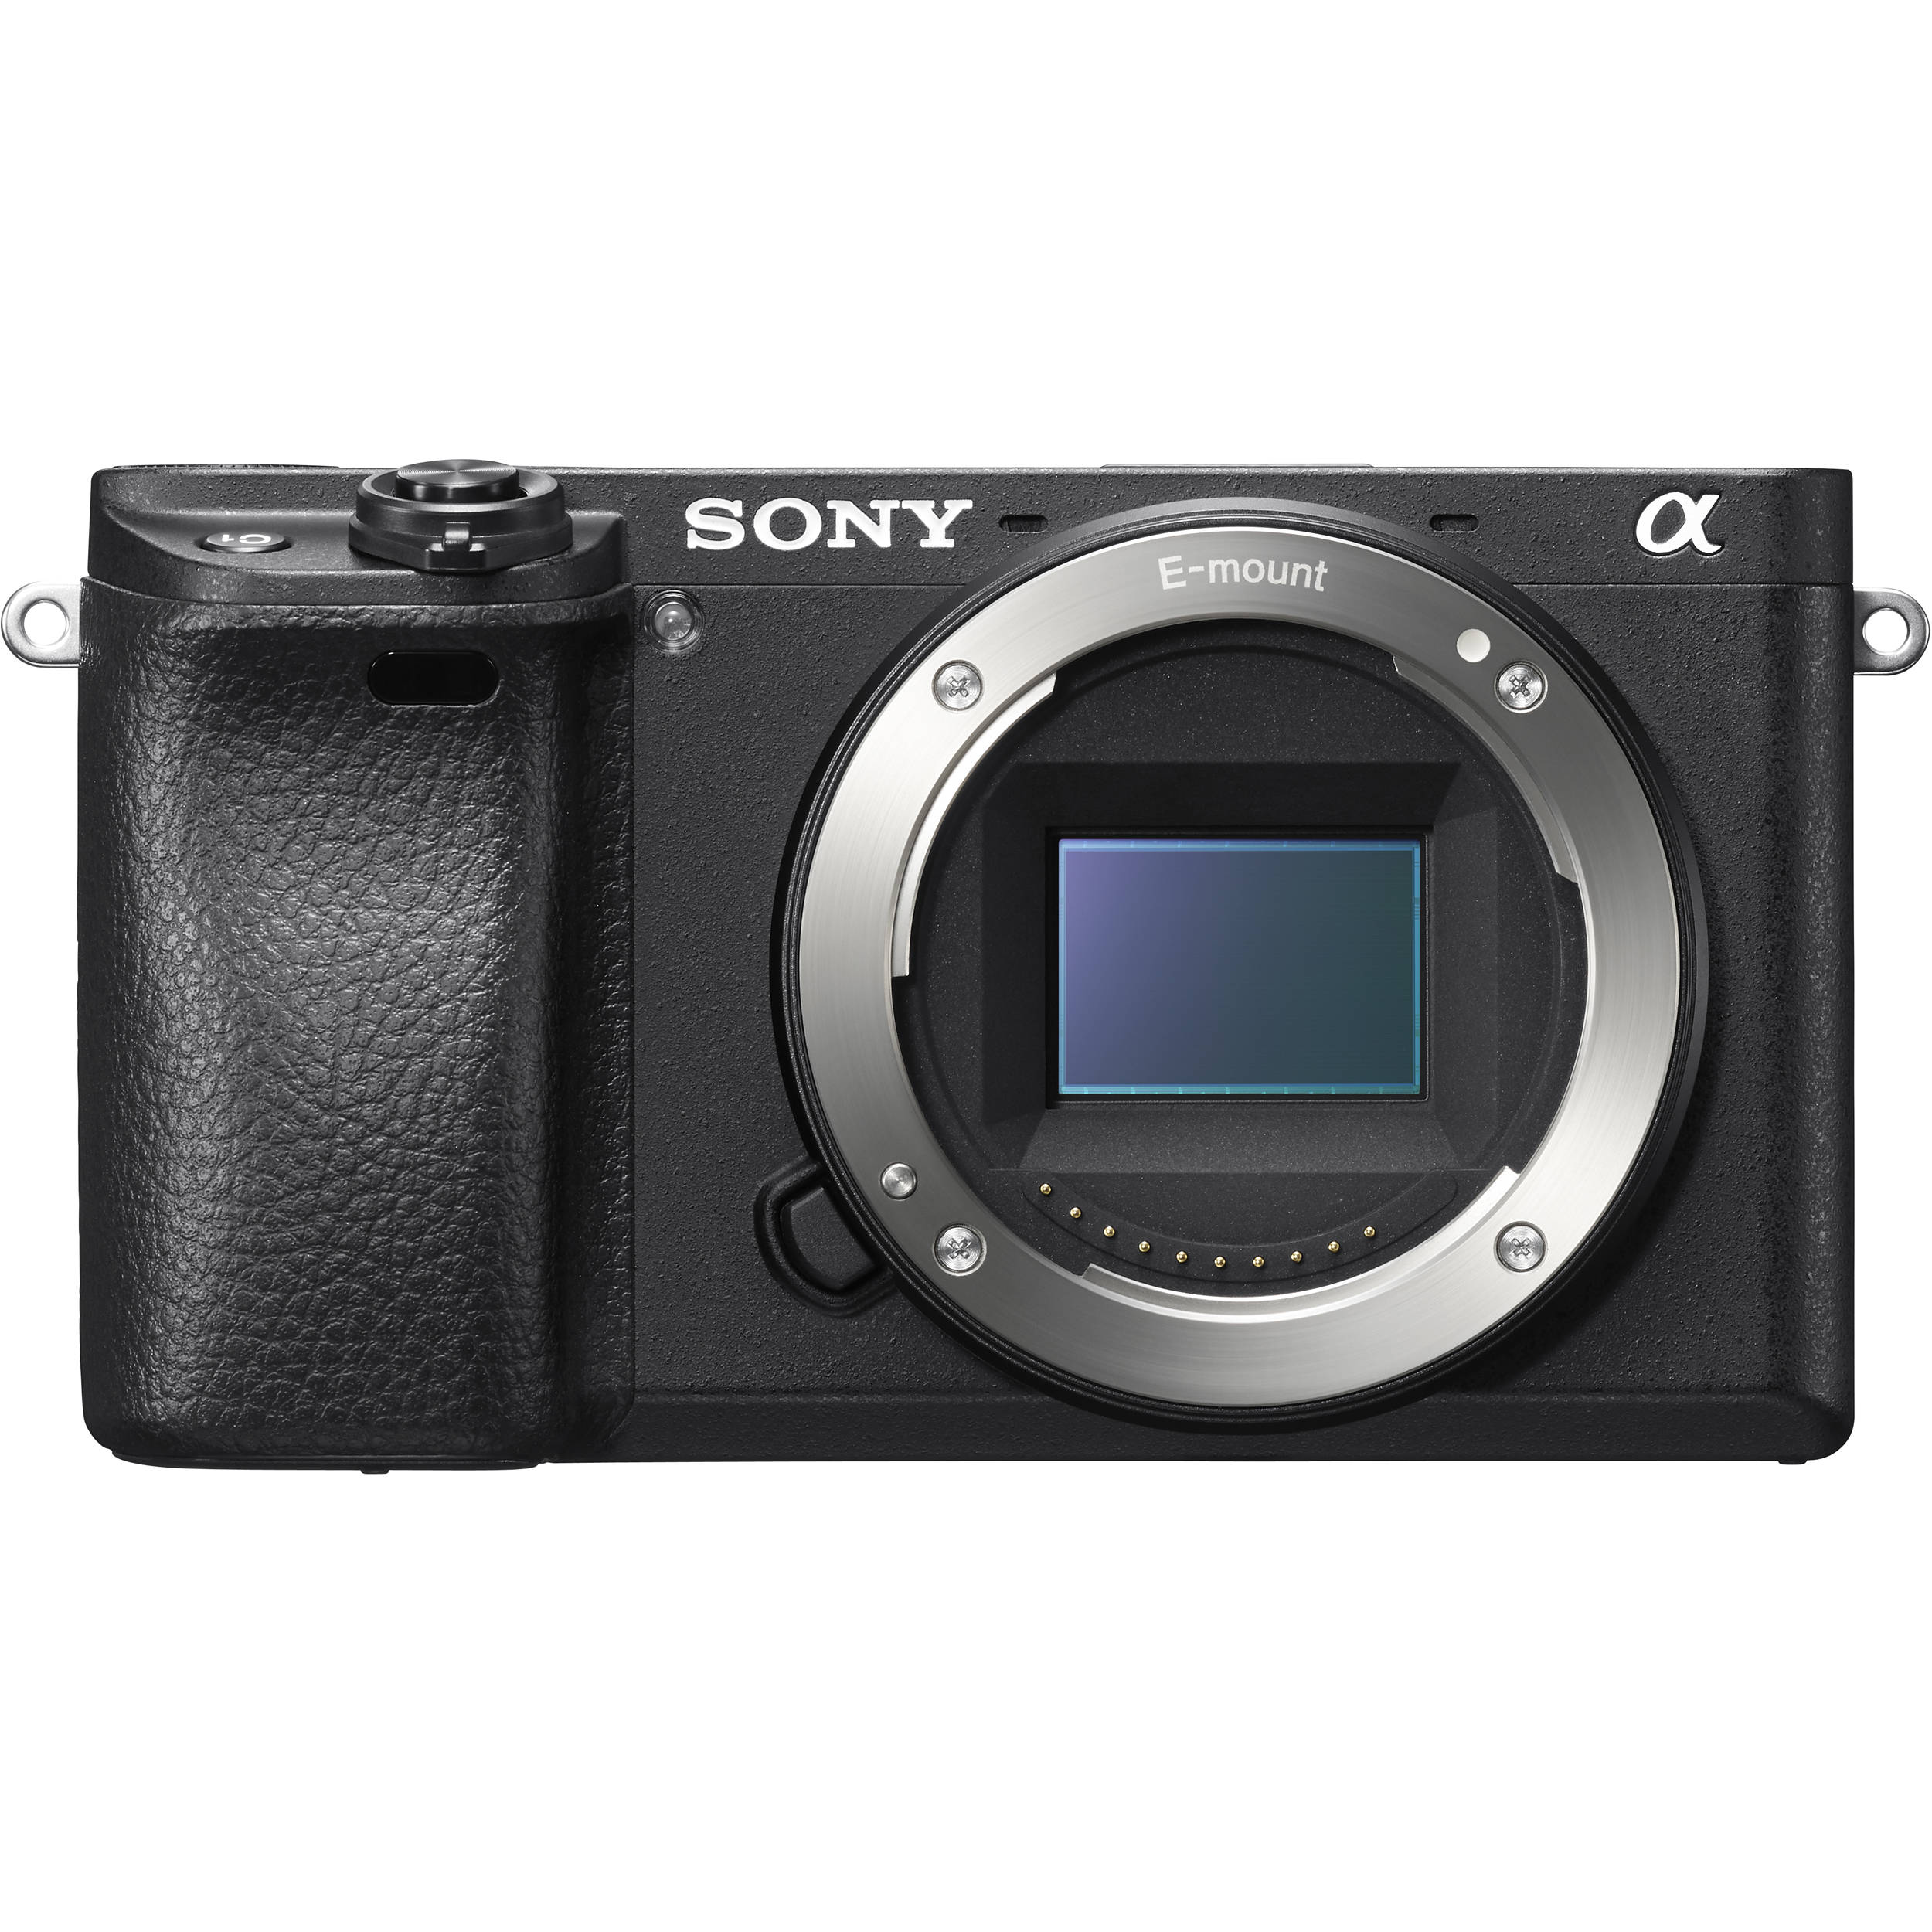 Harga Sony A6300 Body Only Mirrorless Digital Camera